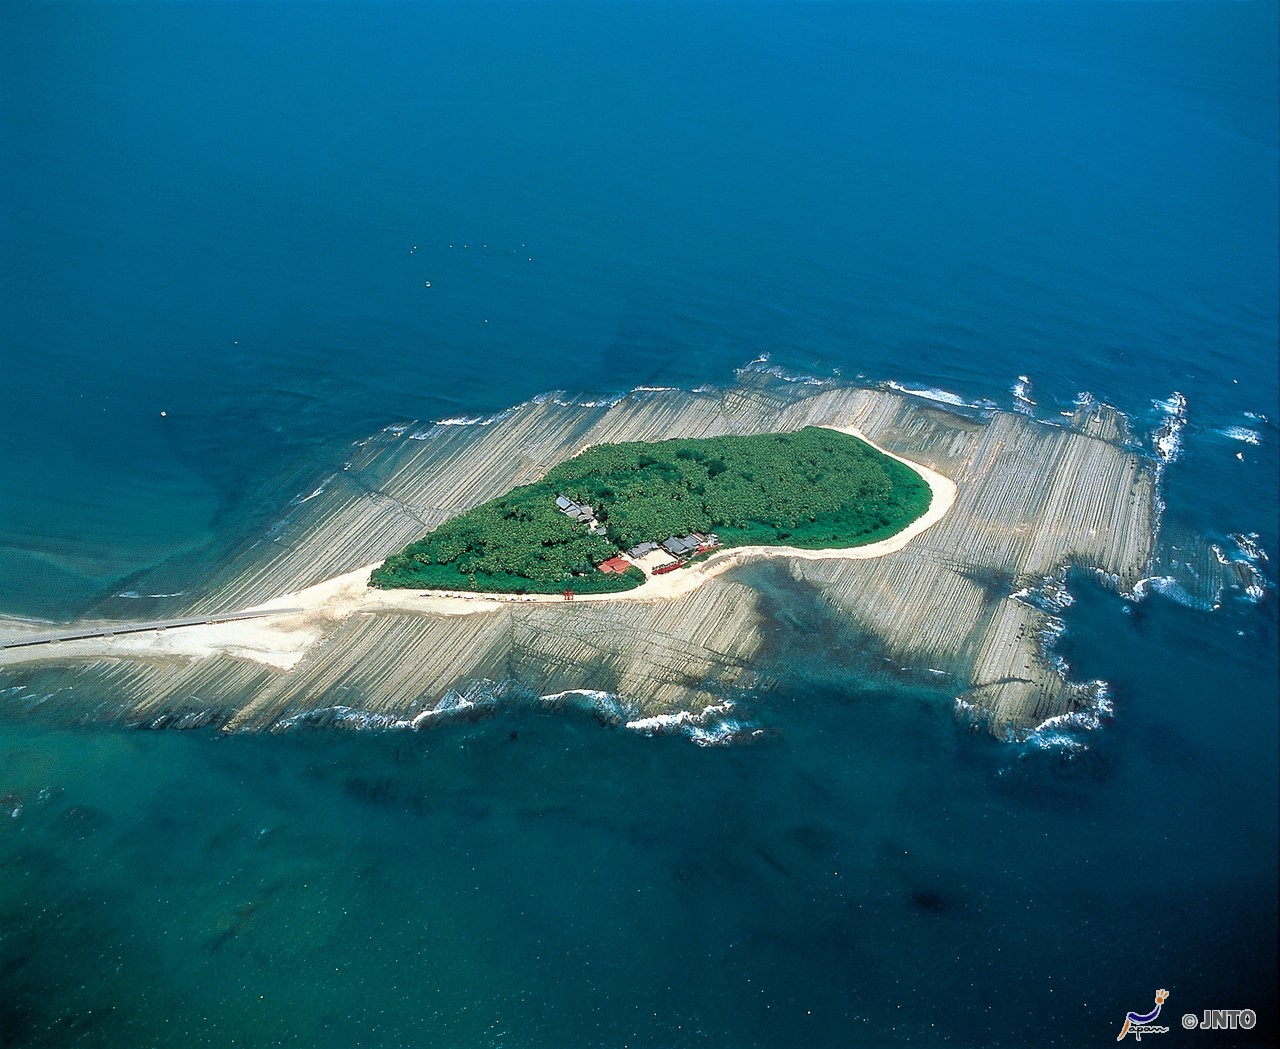 Aoshima Island